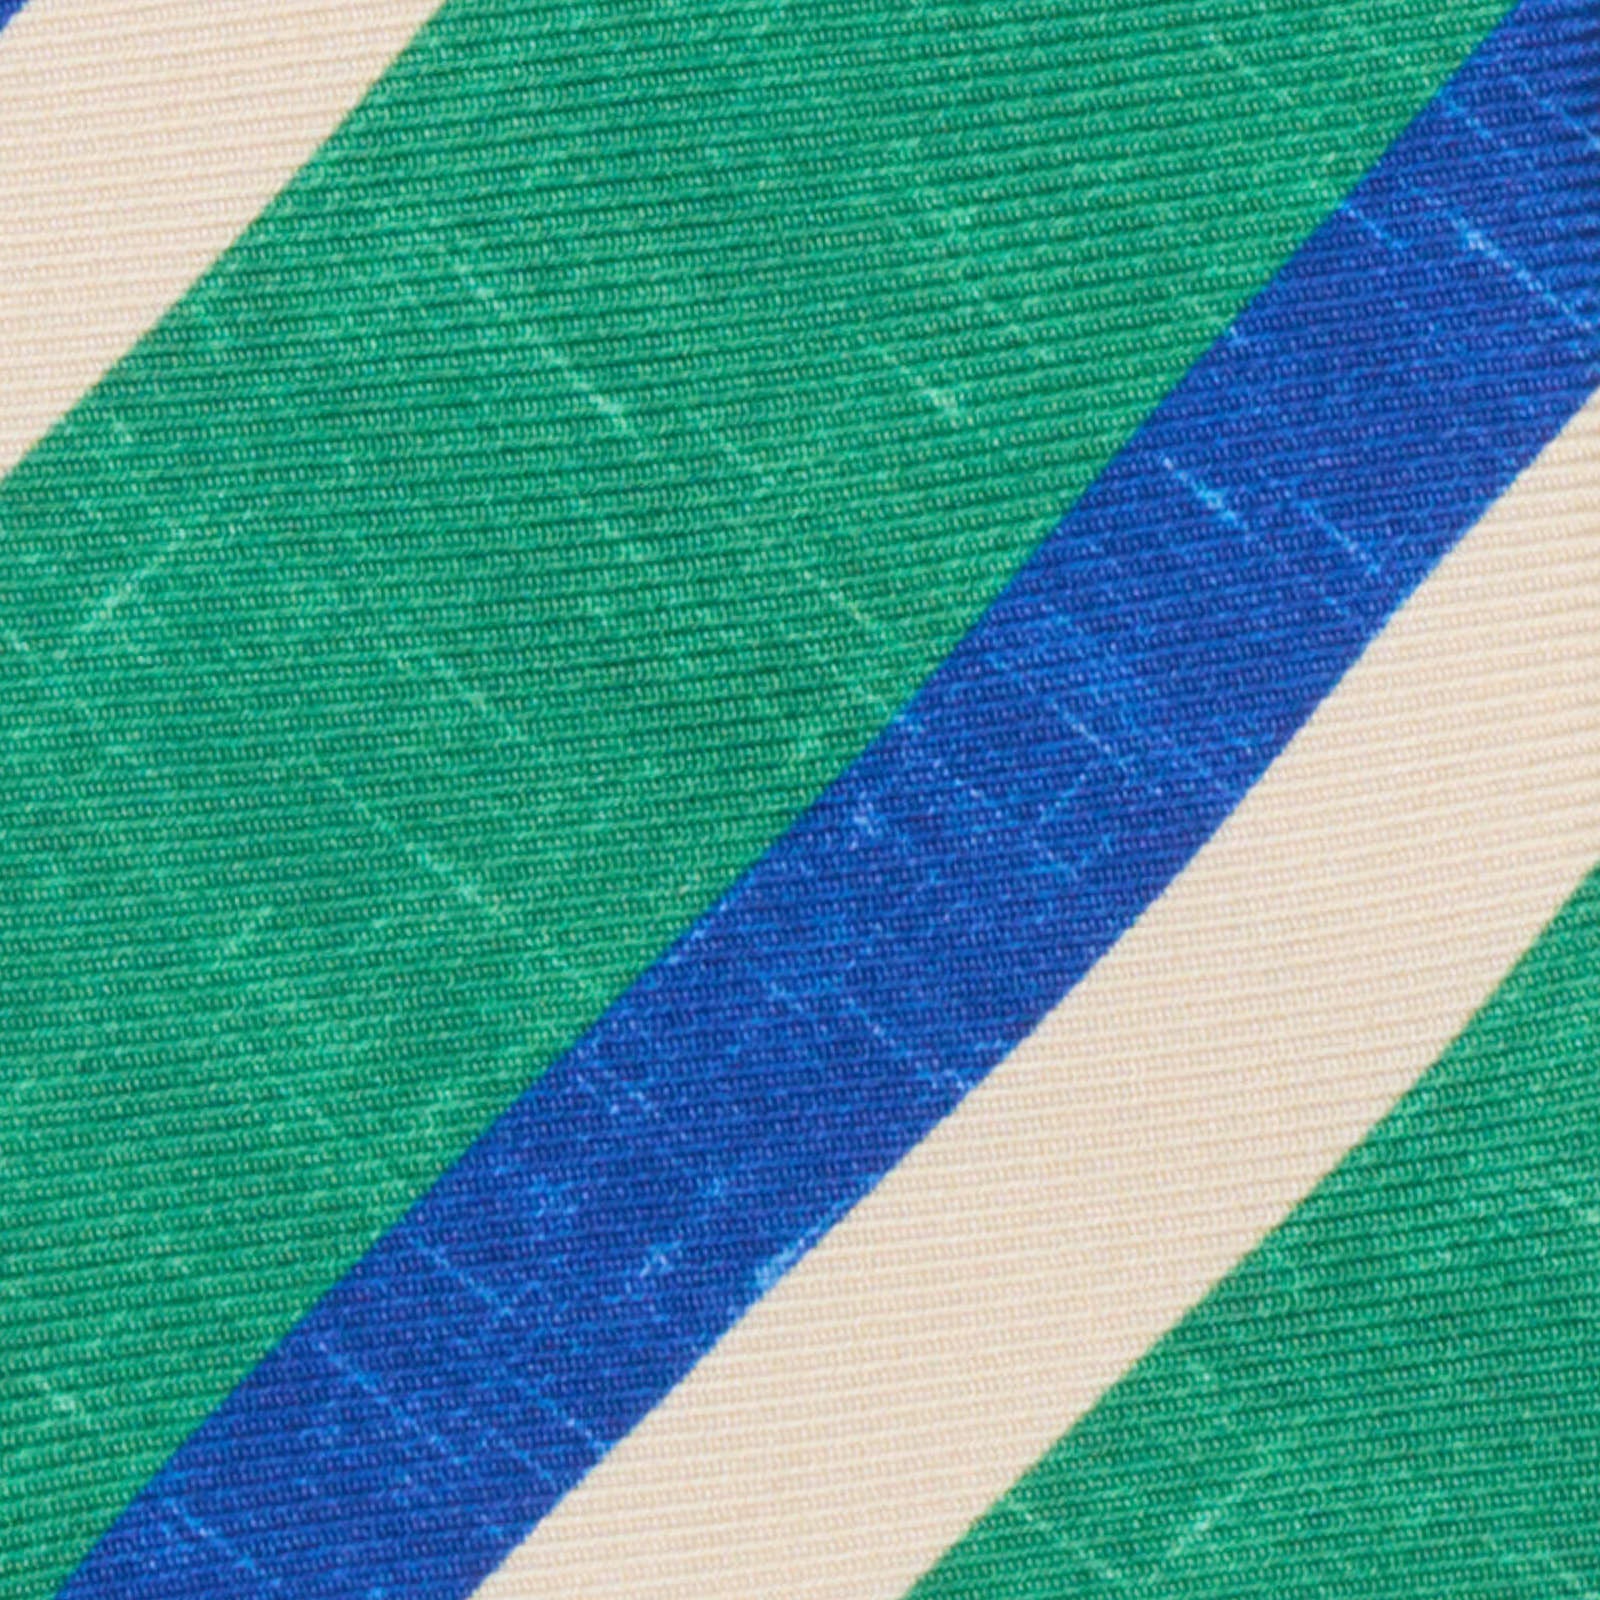 KITON Green-Beige-Blue Diagonal Striped Seven Fold Silk Tie NEW